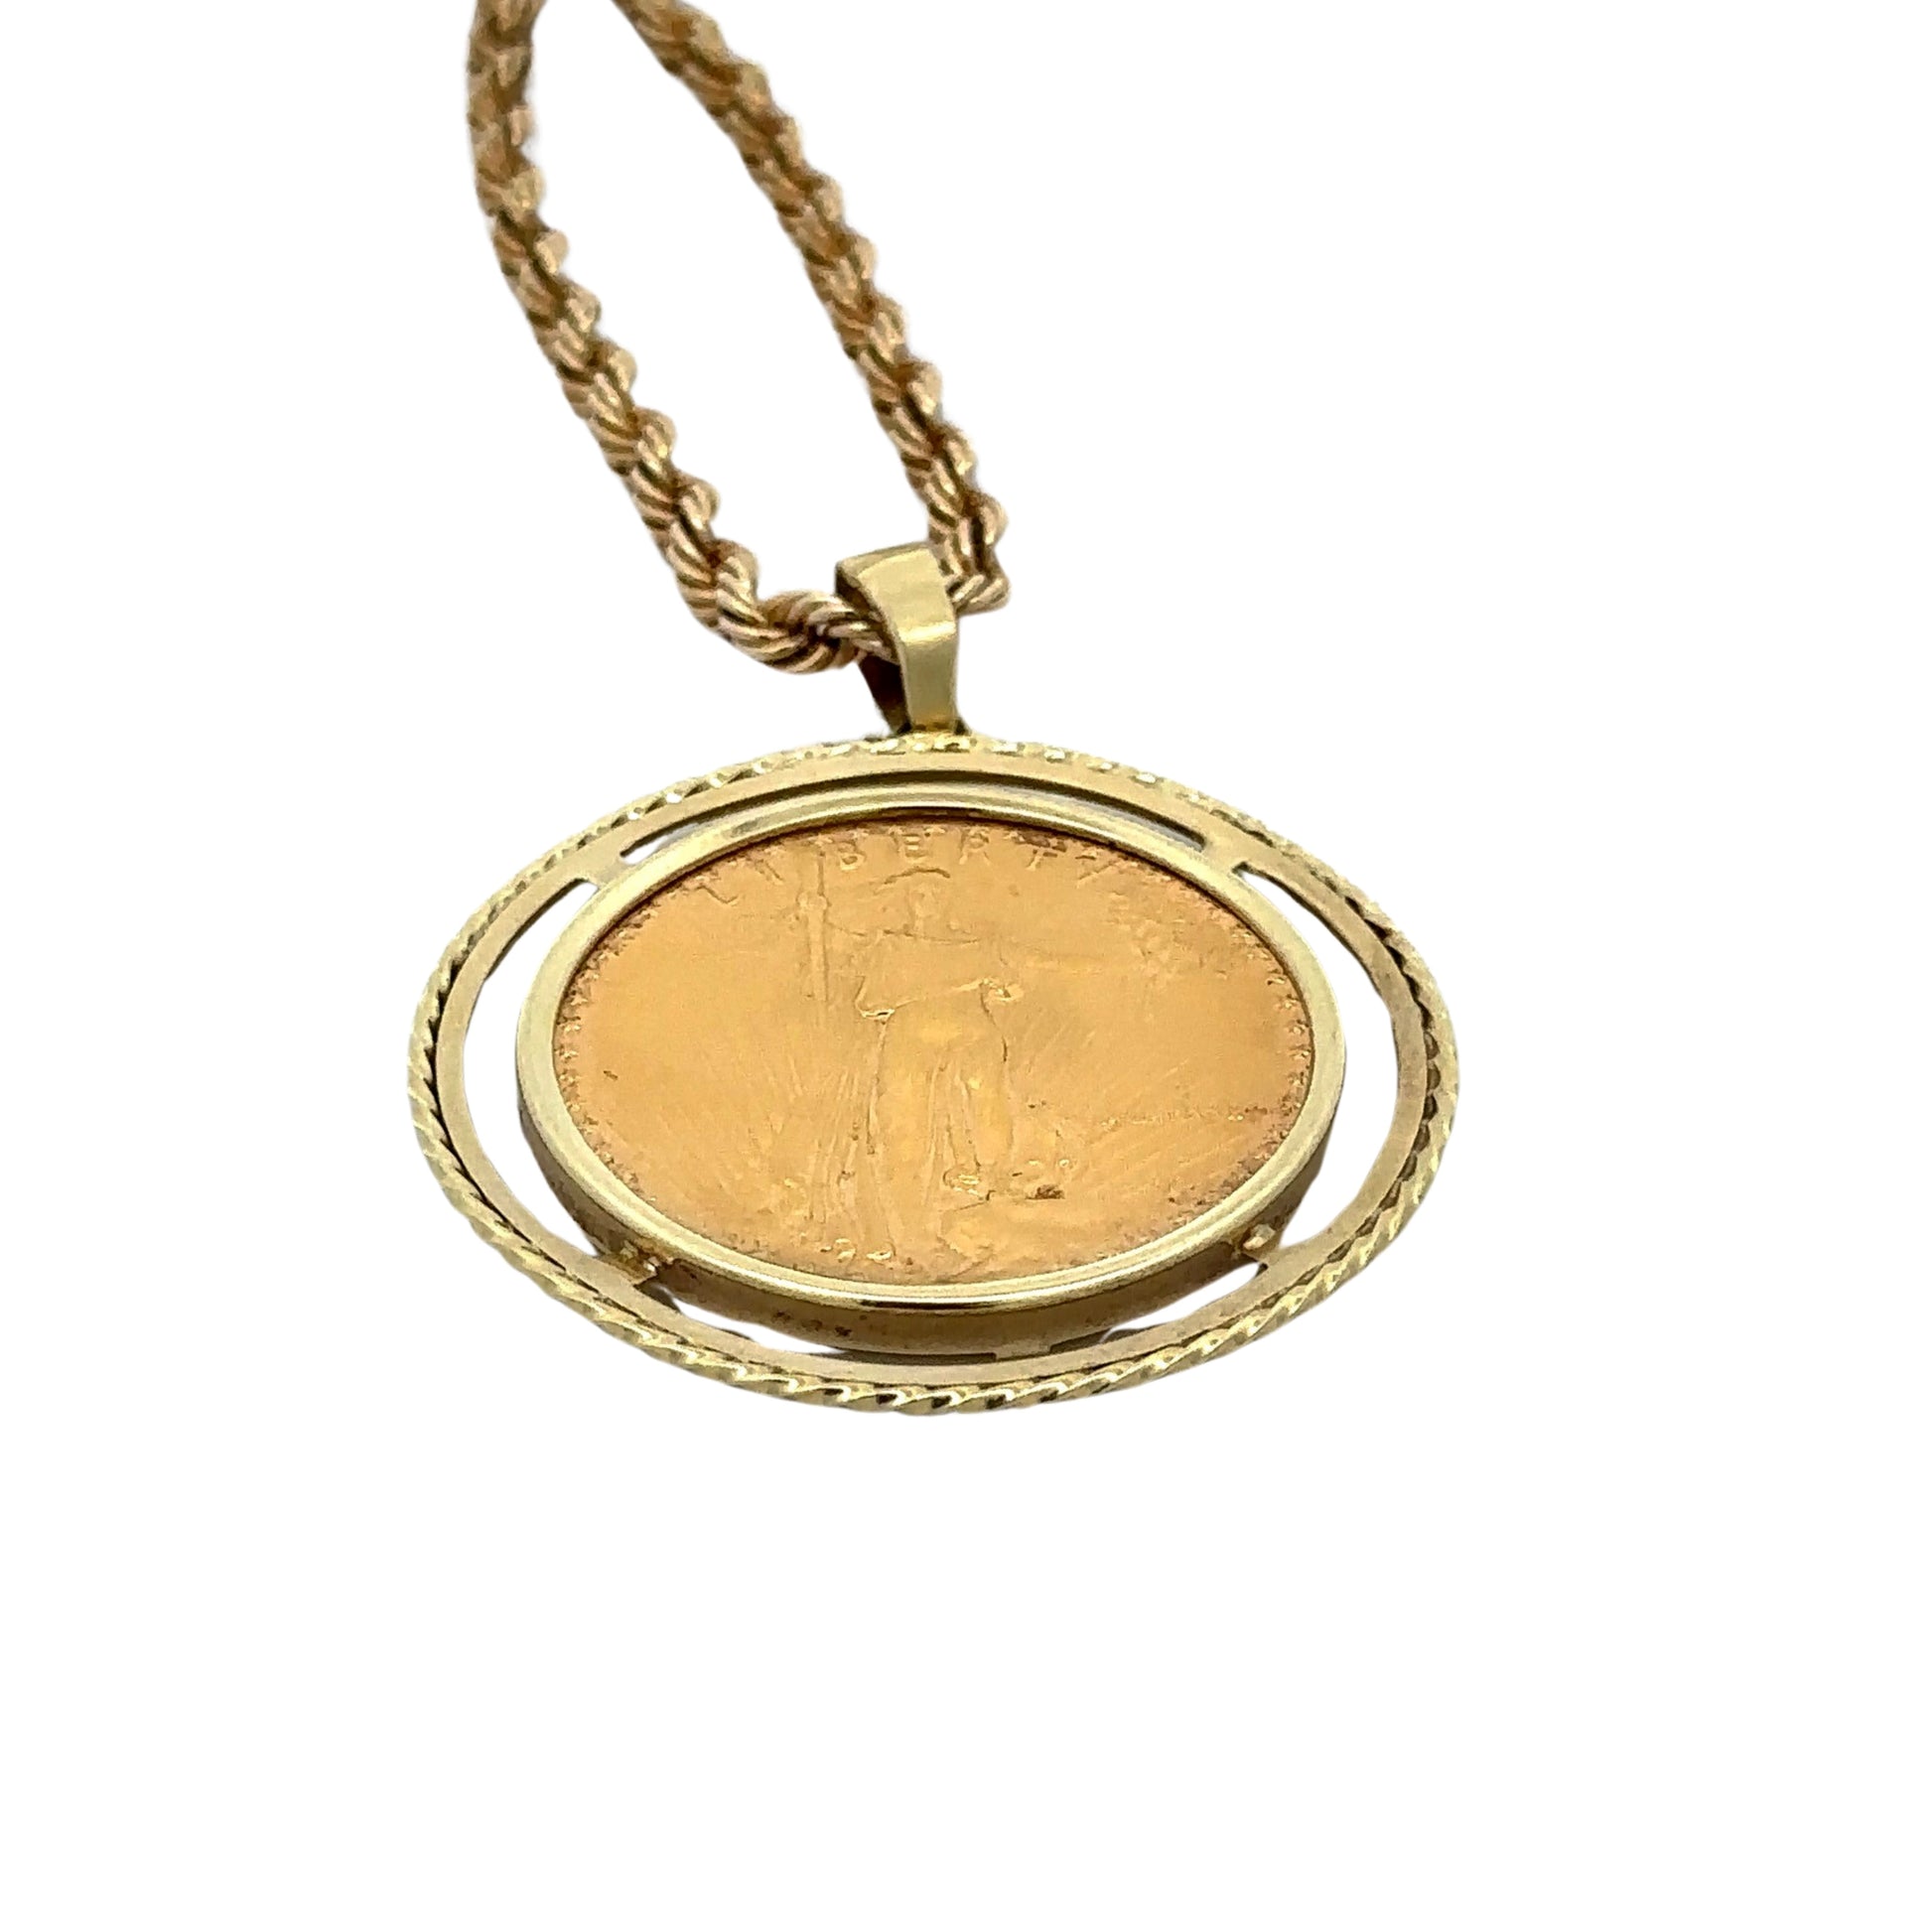 bottom of coin pendant